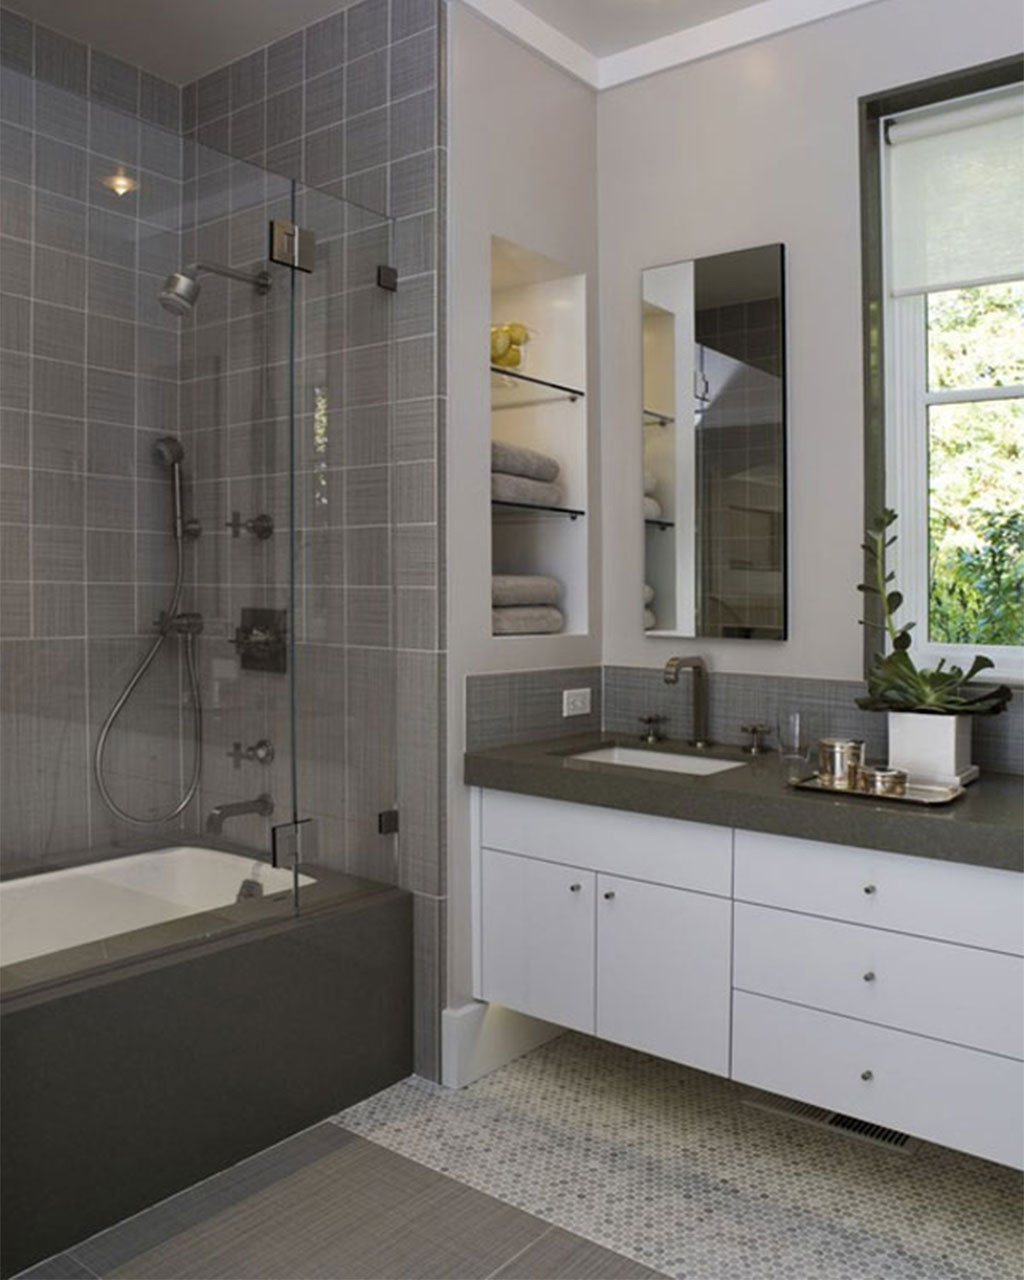 Bathroom Shower Design Ideas
 30 Best Small Bathroom Ideas